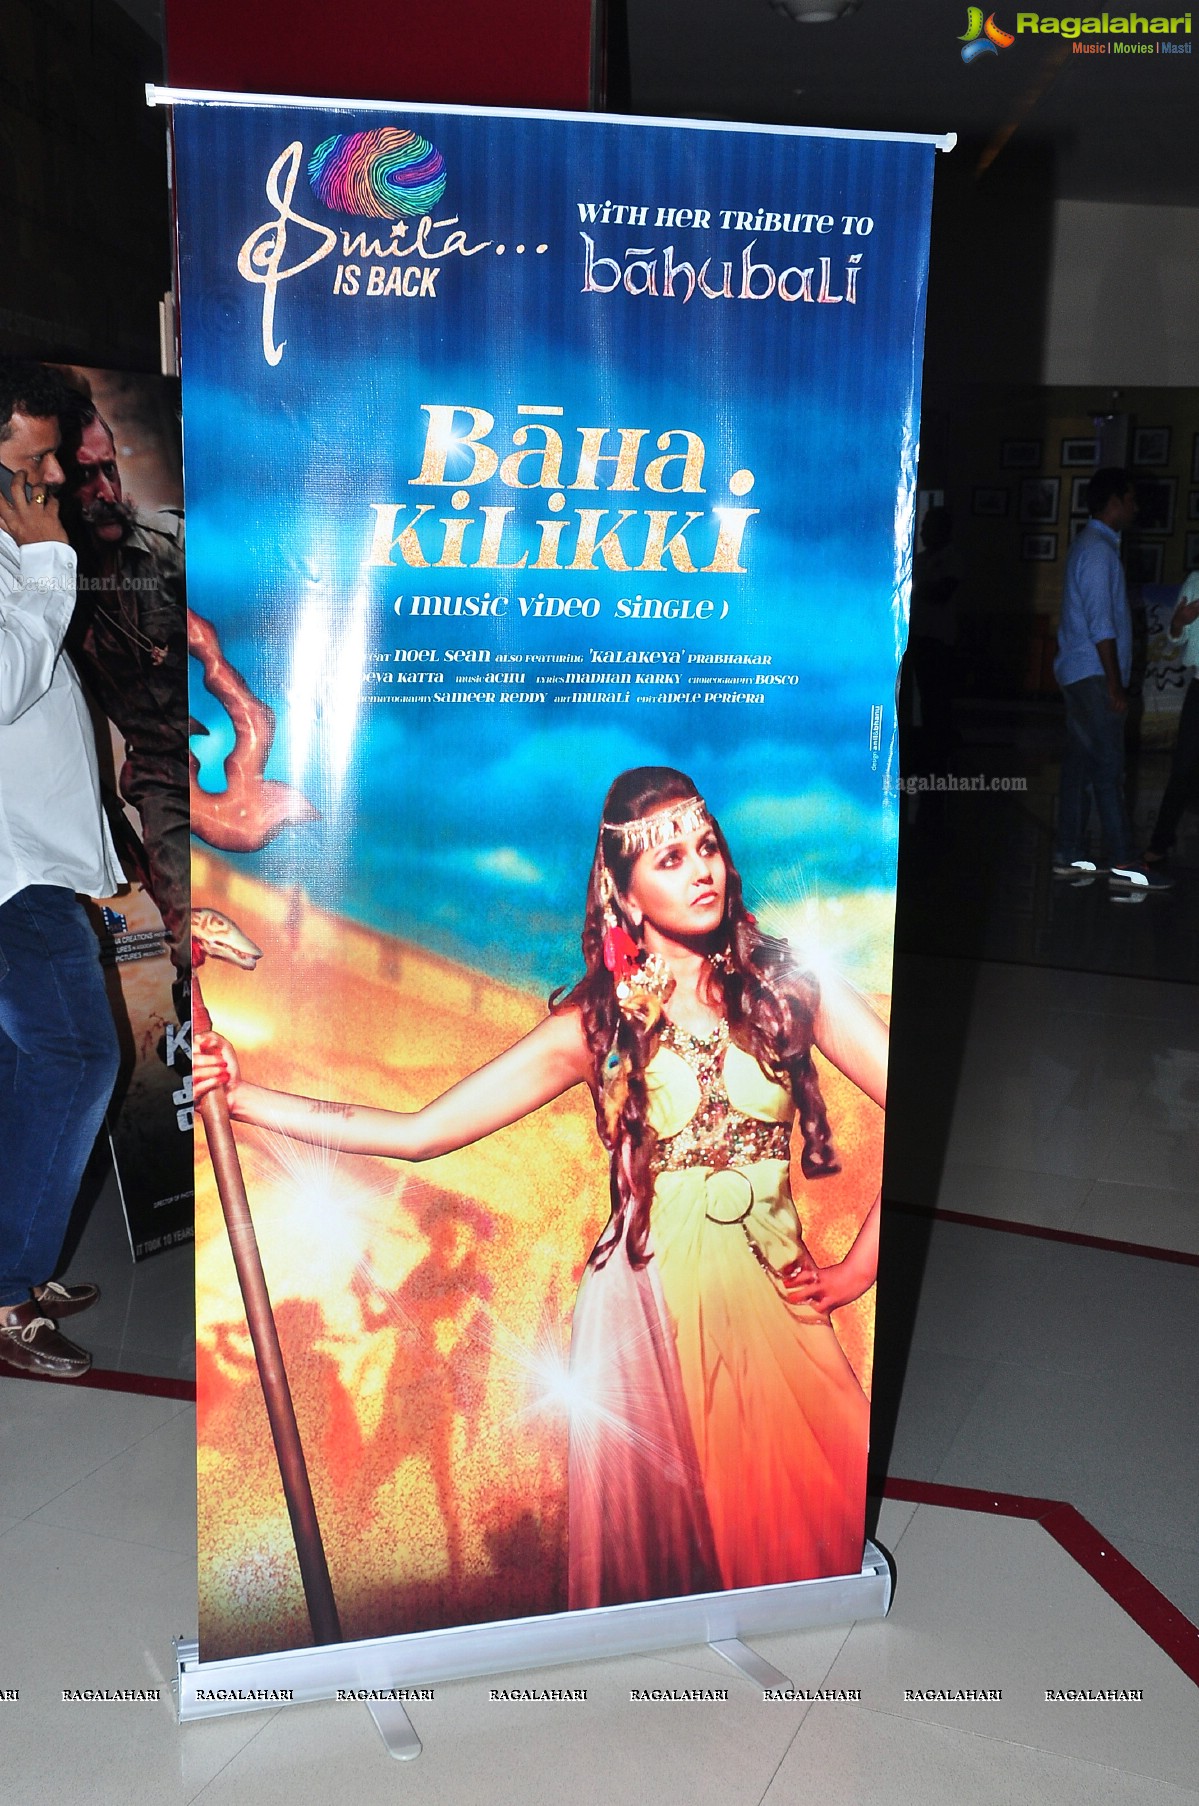 Smita's Baha Kilikki Video Song Launch